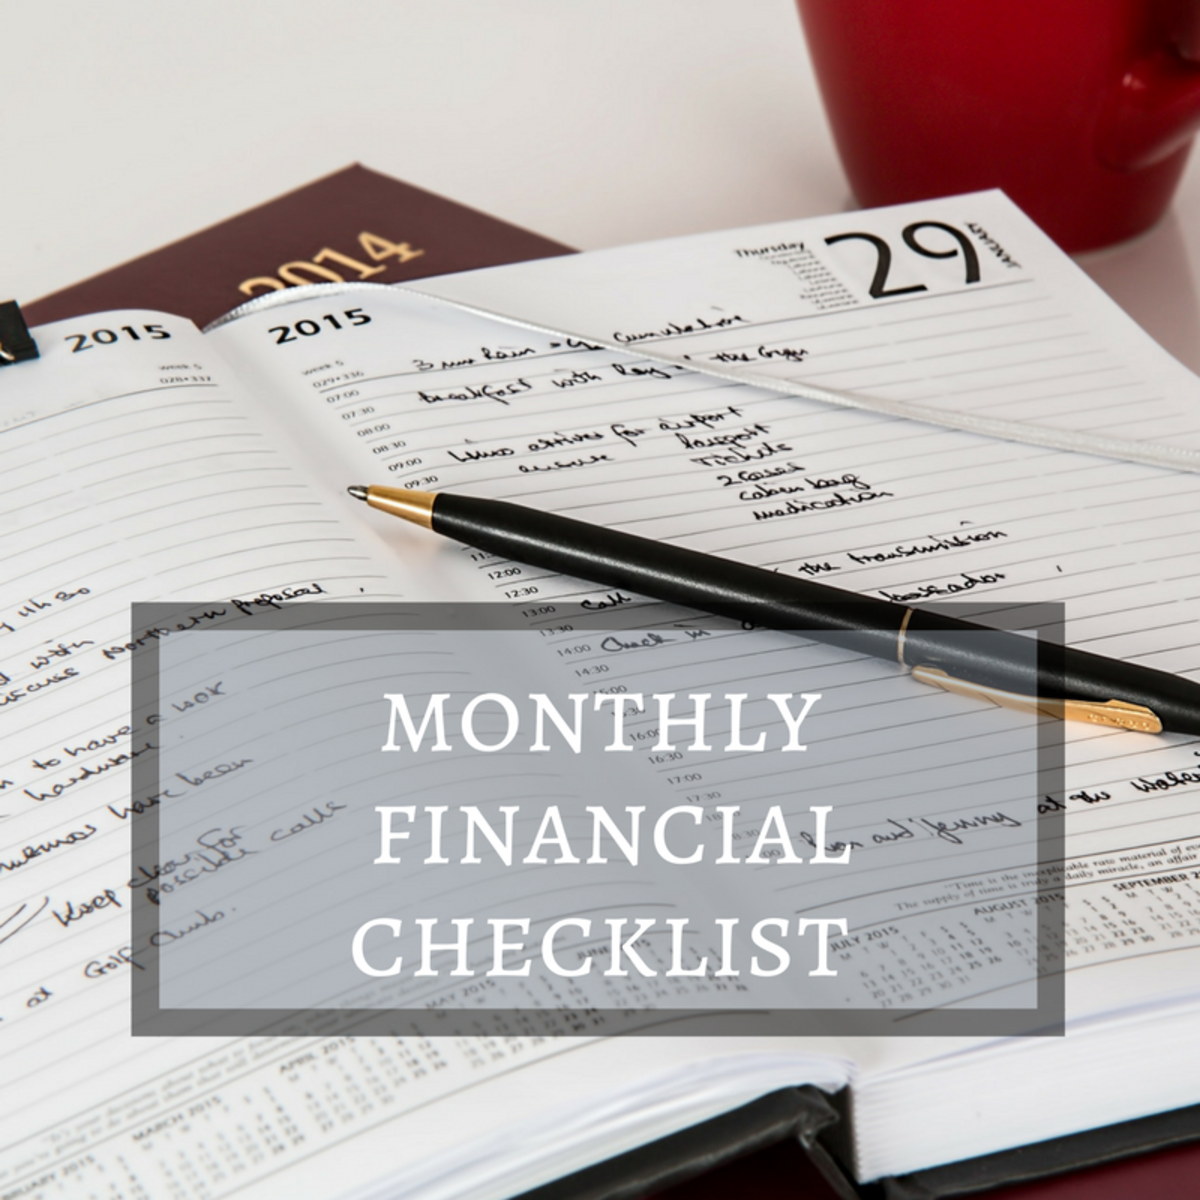 Monthly Financial Checklist